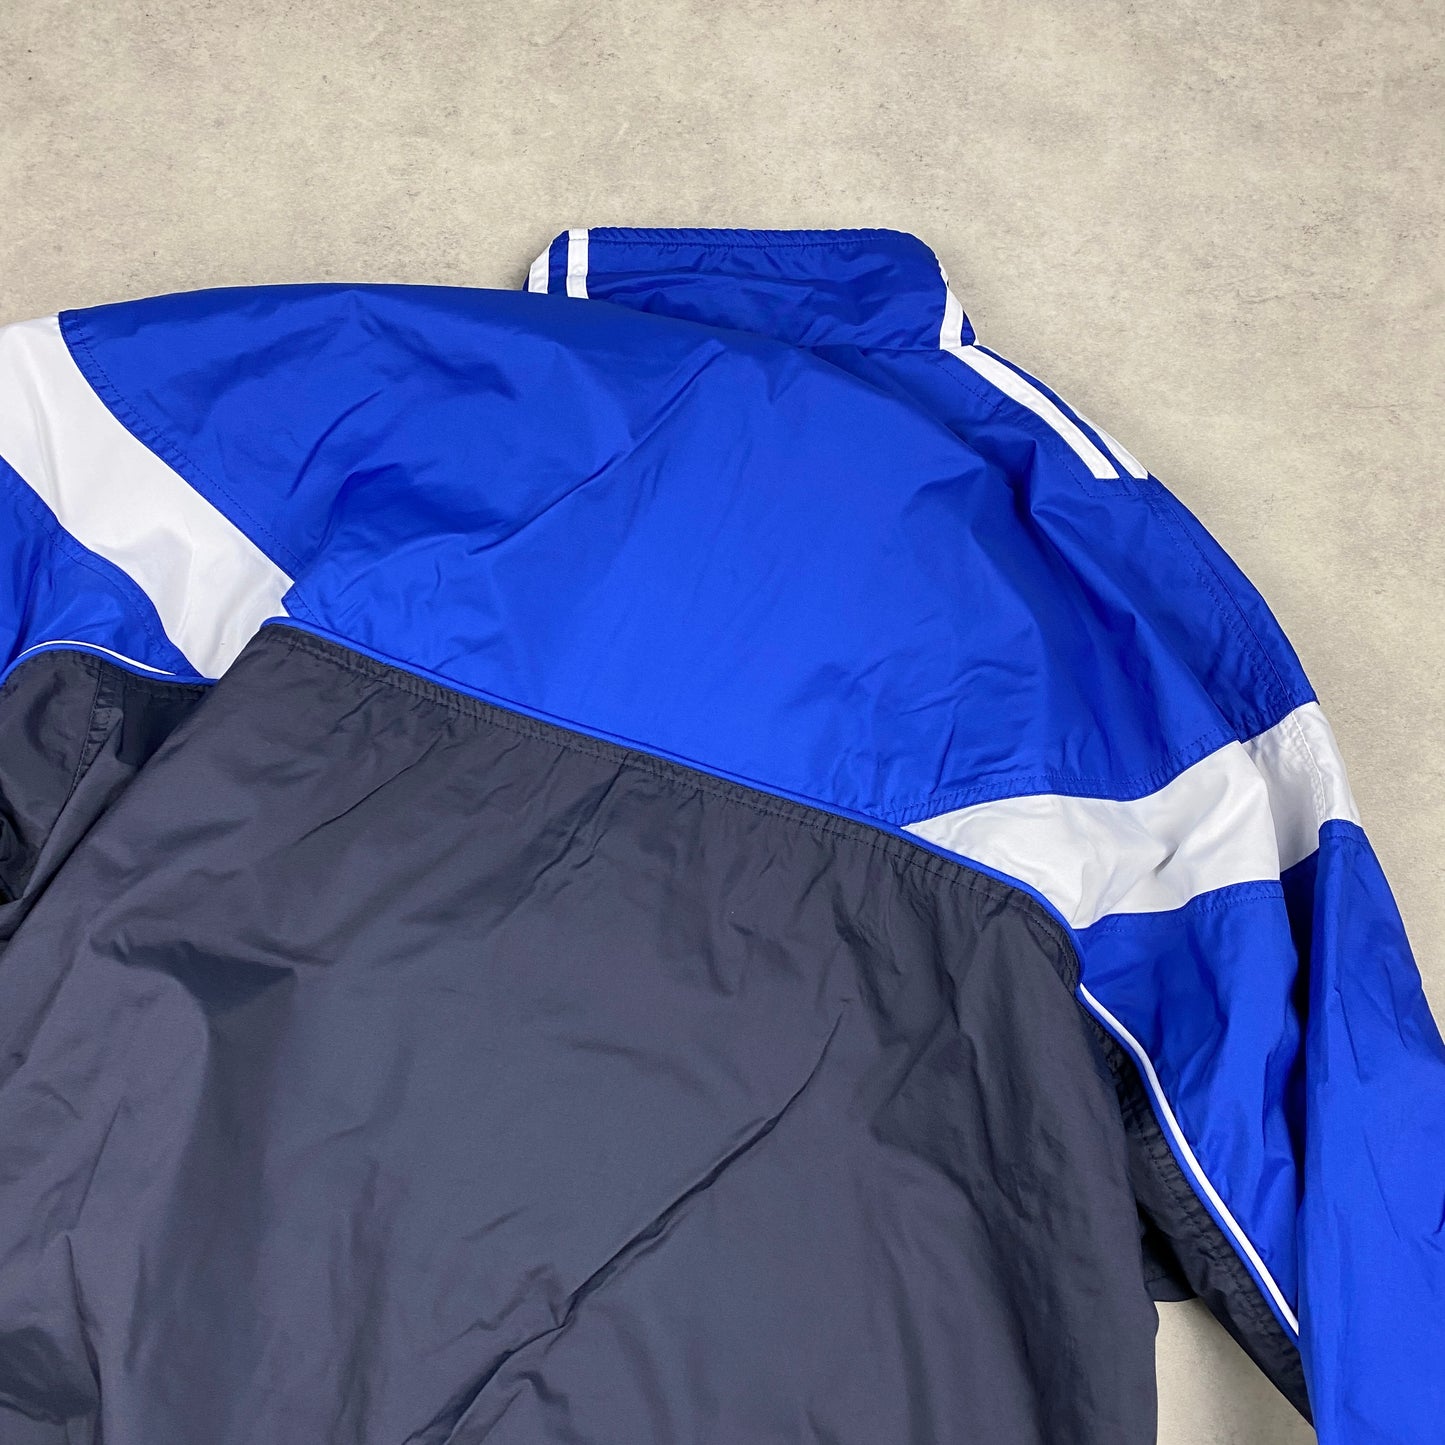 Adidas RARE track jacket (L)